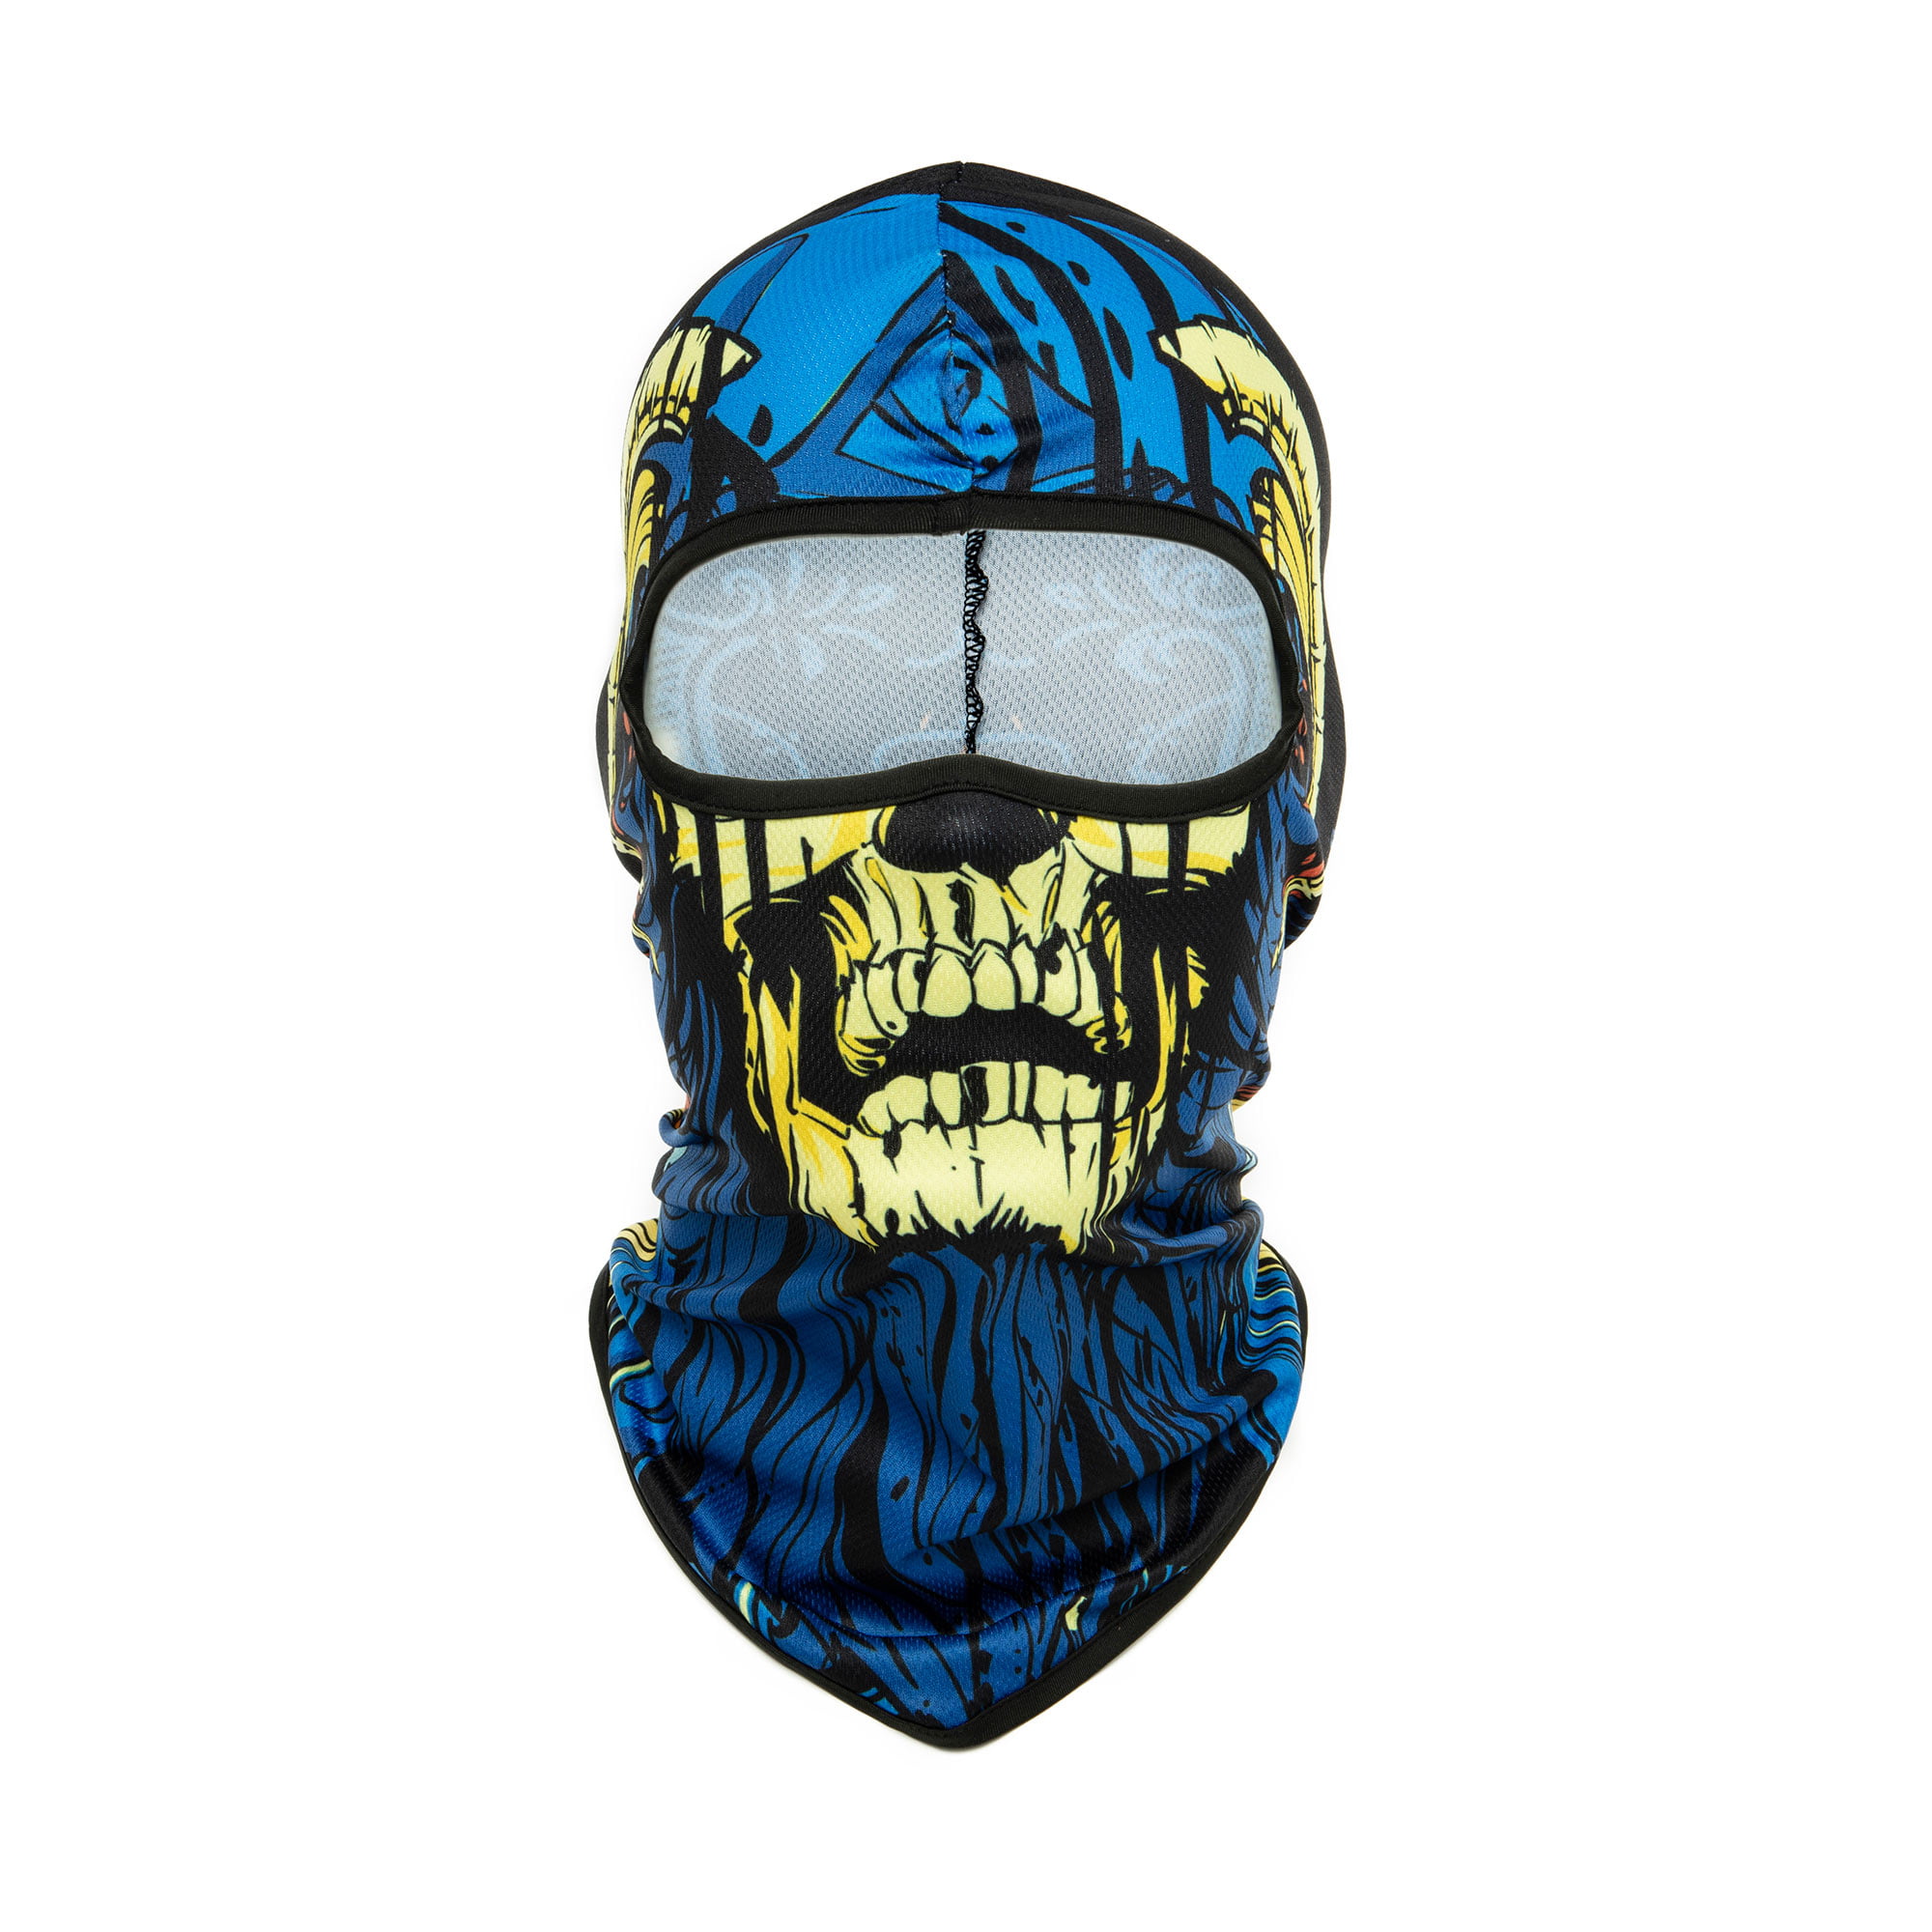 Magic Headwear Black Hole Outdoor Scarf Headbands Bandana Mask Neck Gaiter Head Wrap Mask Sweatband 